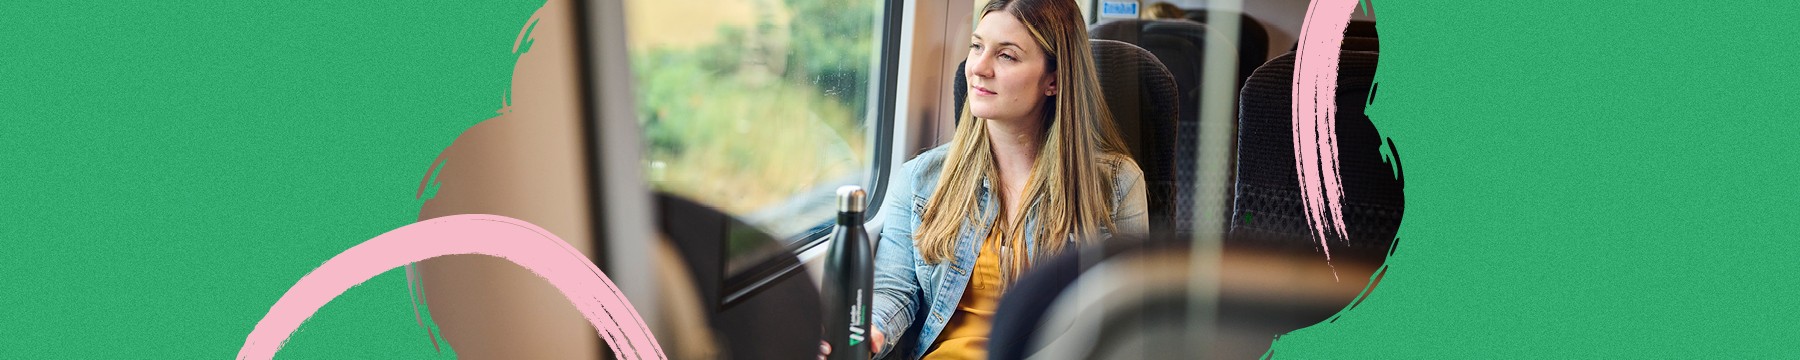 Woman sitting on a train